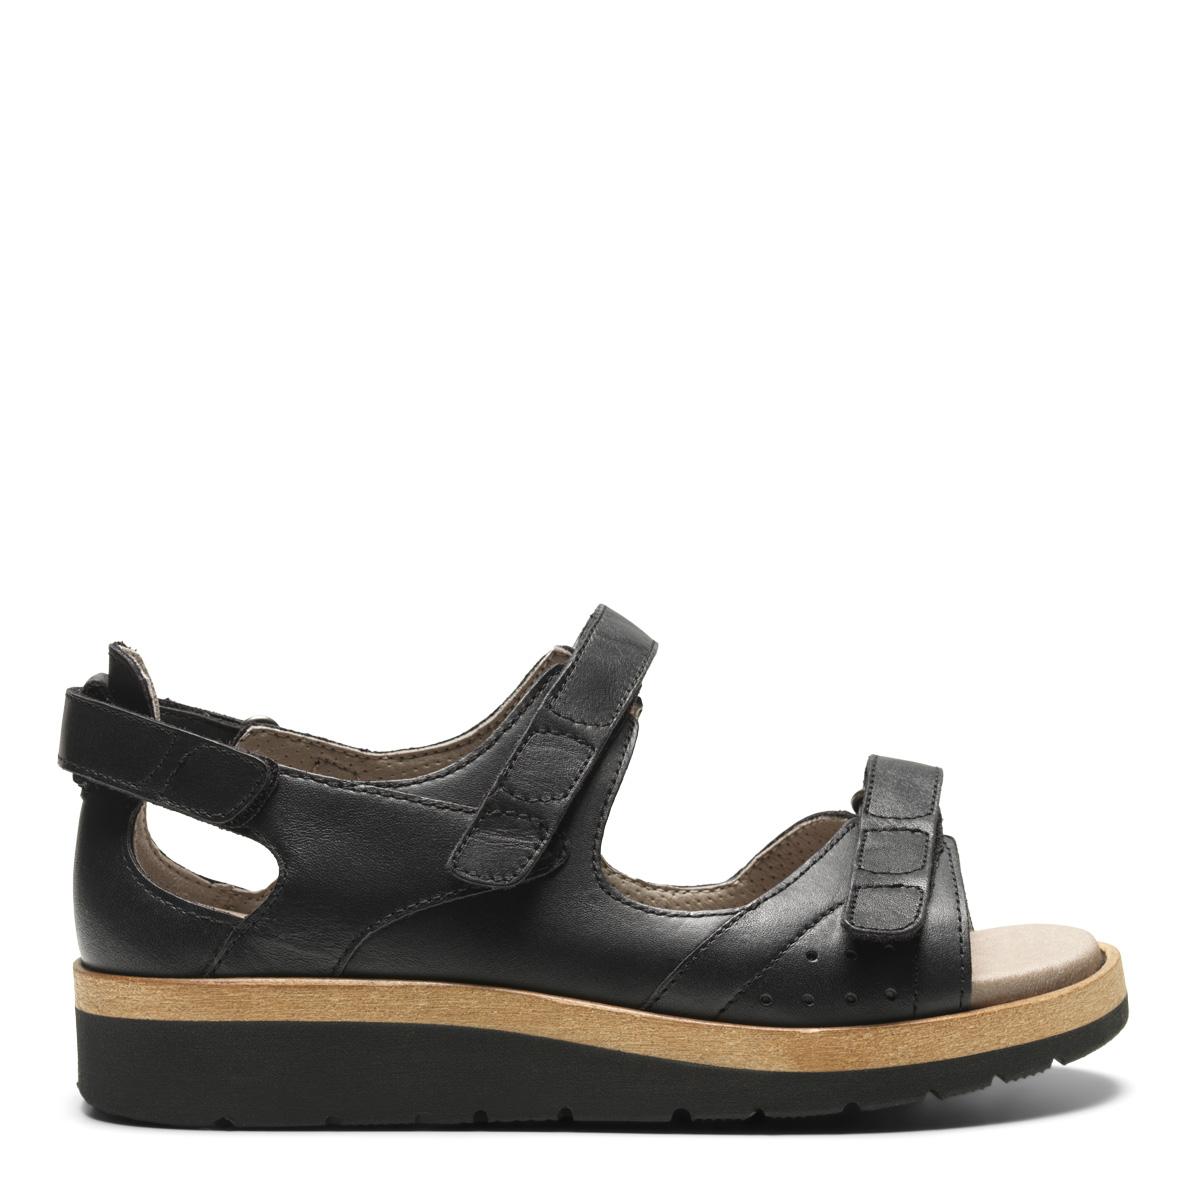 Women´s sandal with two adjustable velcro straps and half-open heel cap